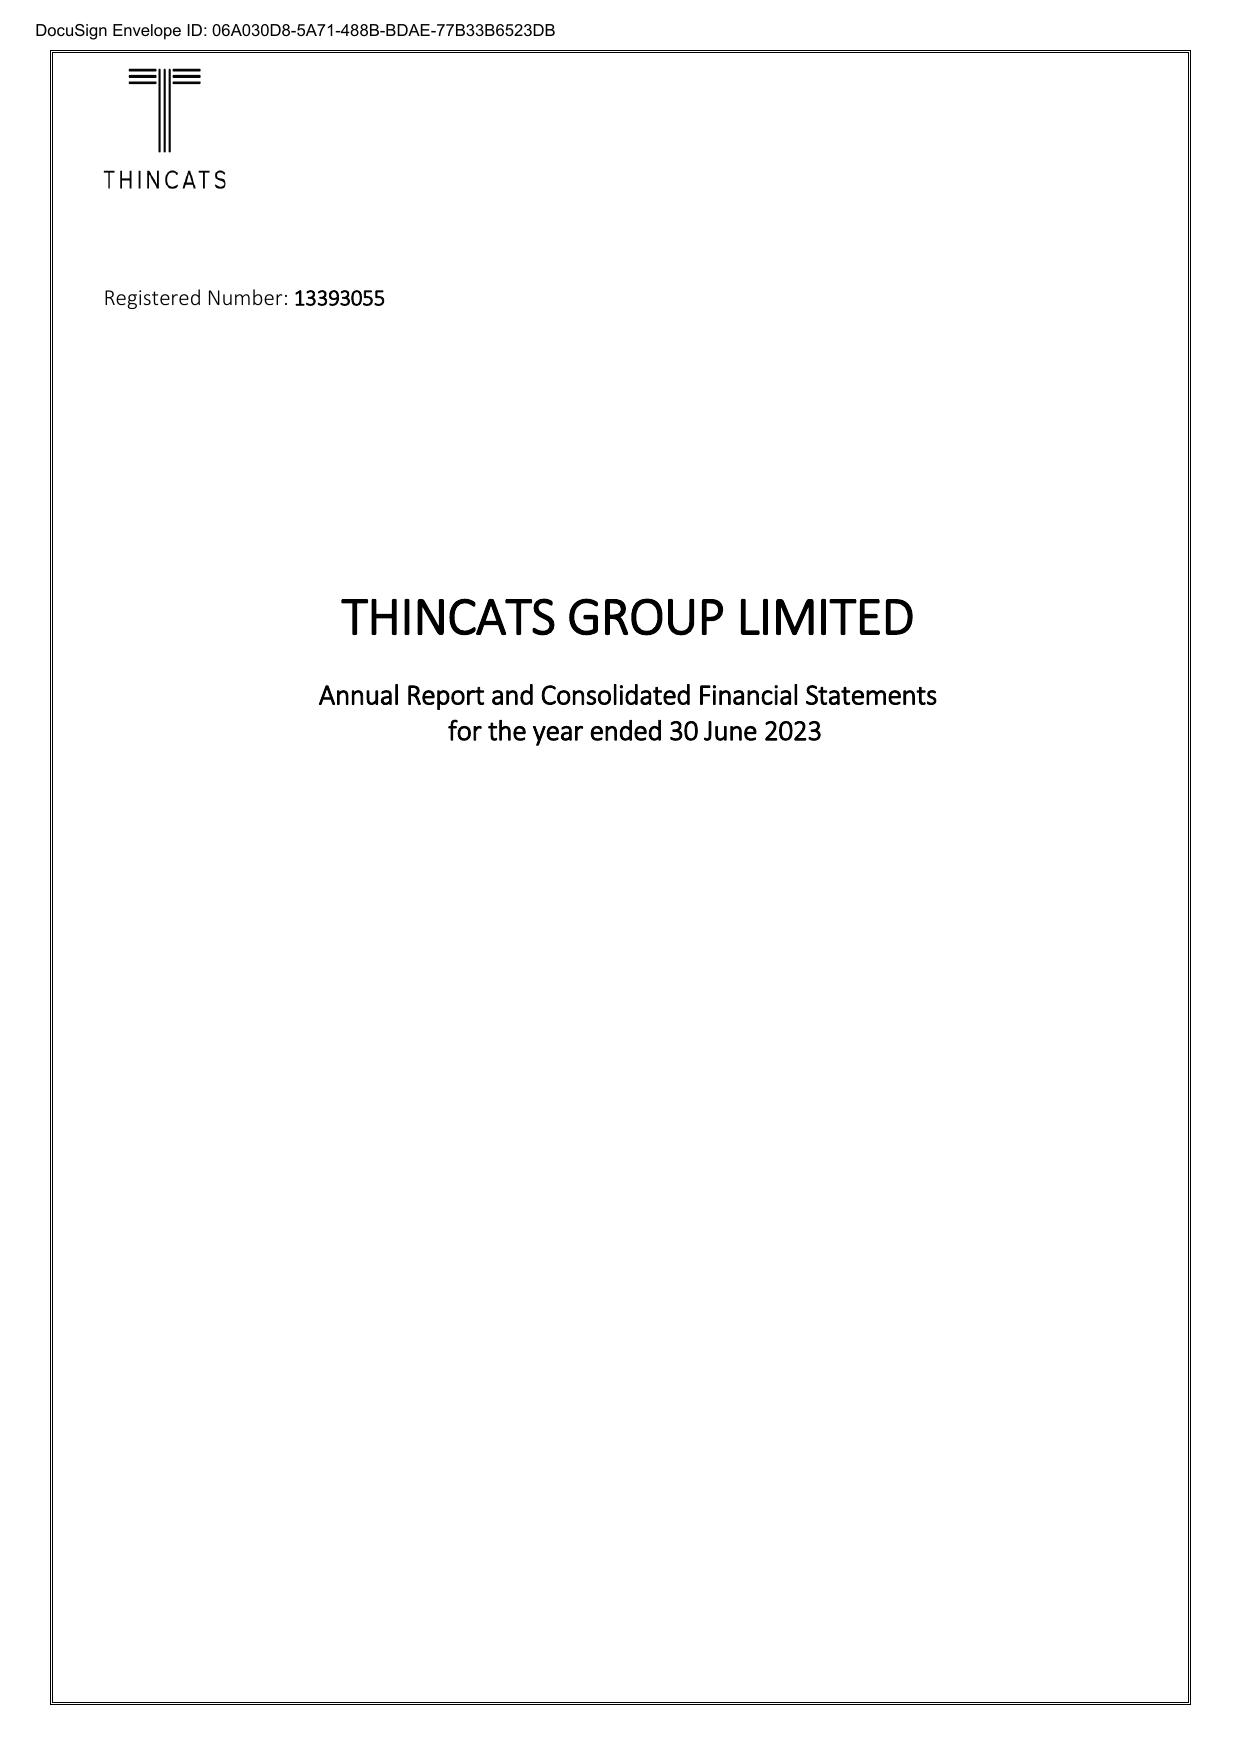 THINCATS 2024 Annual Report